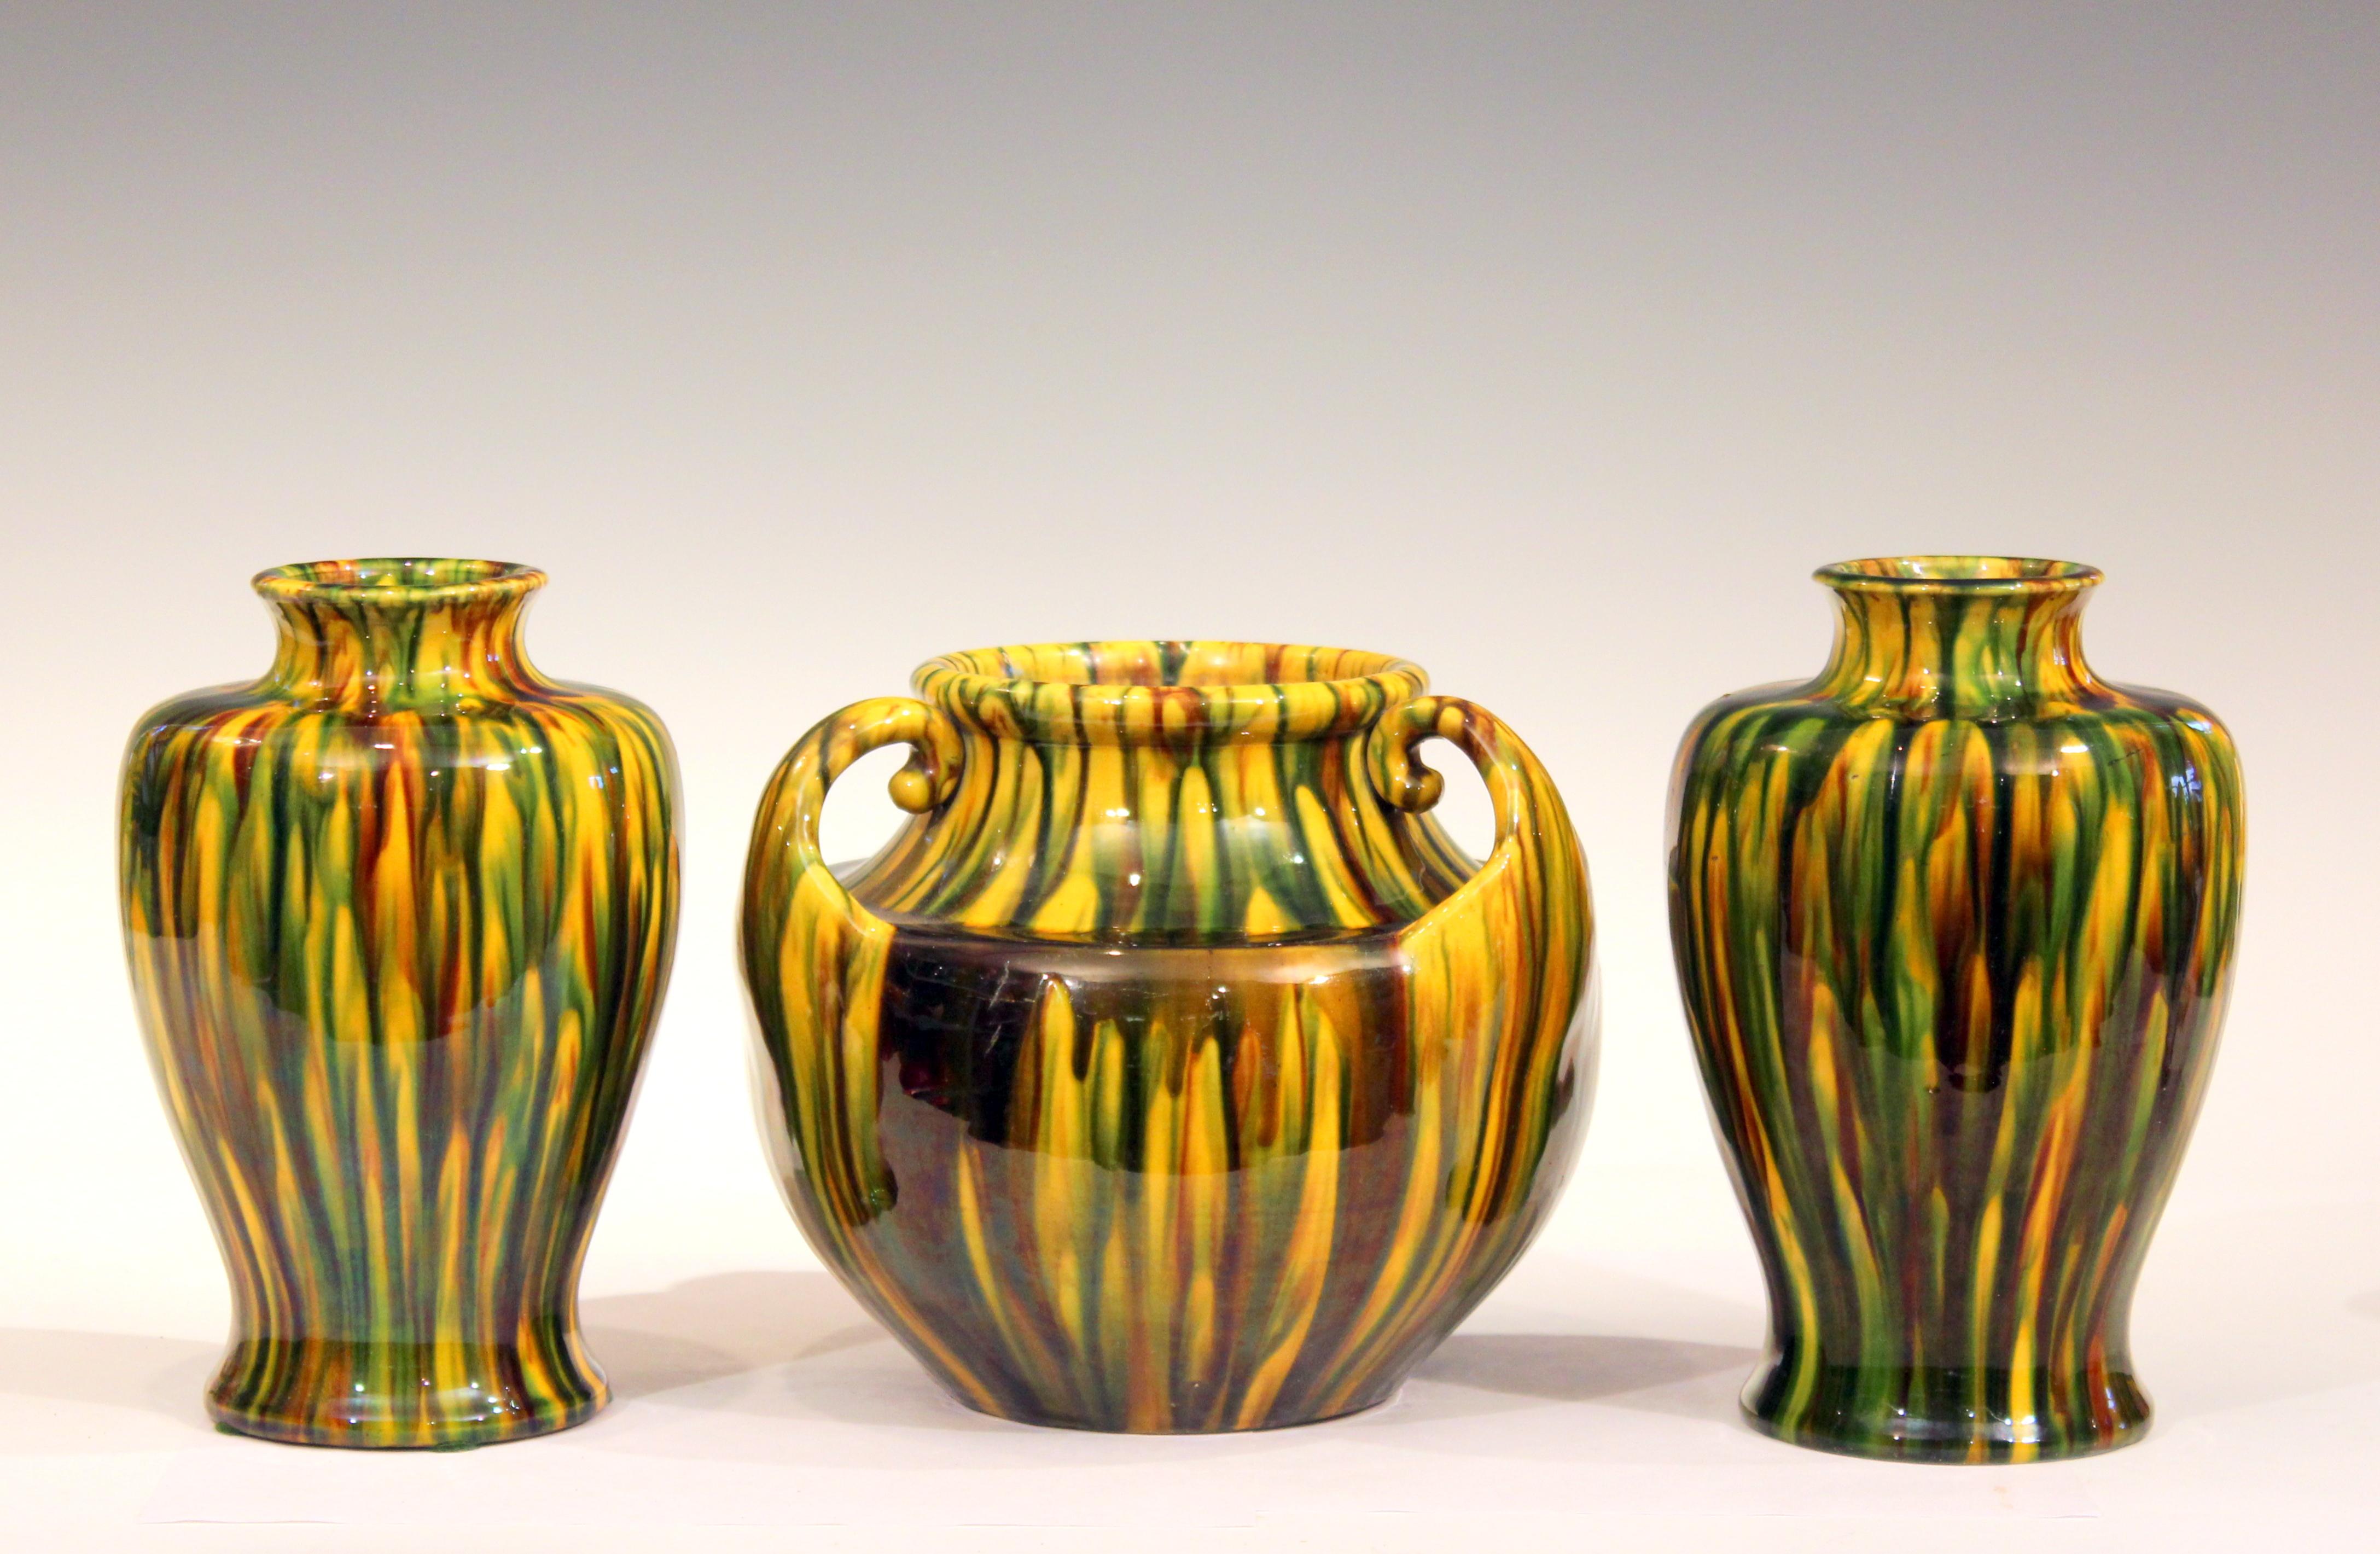 Awaji Pottery Art Deco Japanese Vintage Studio Yellow Vase Flambe Glaze 4